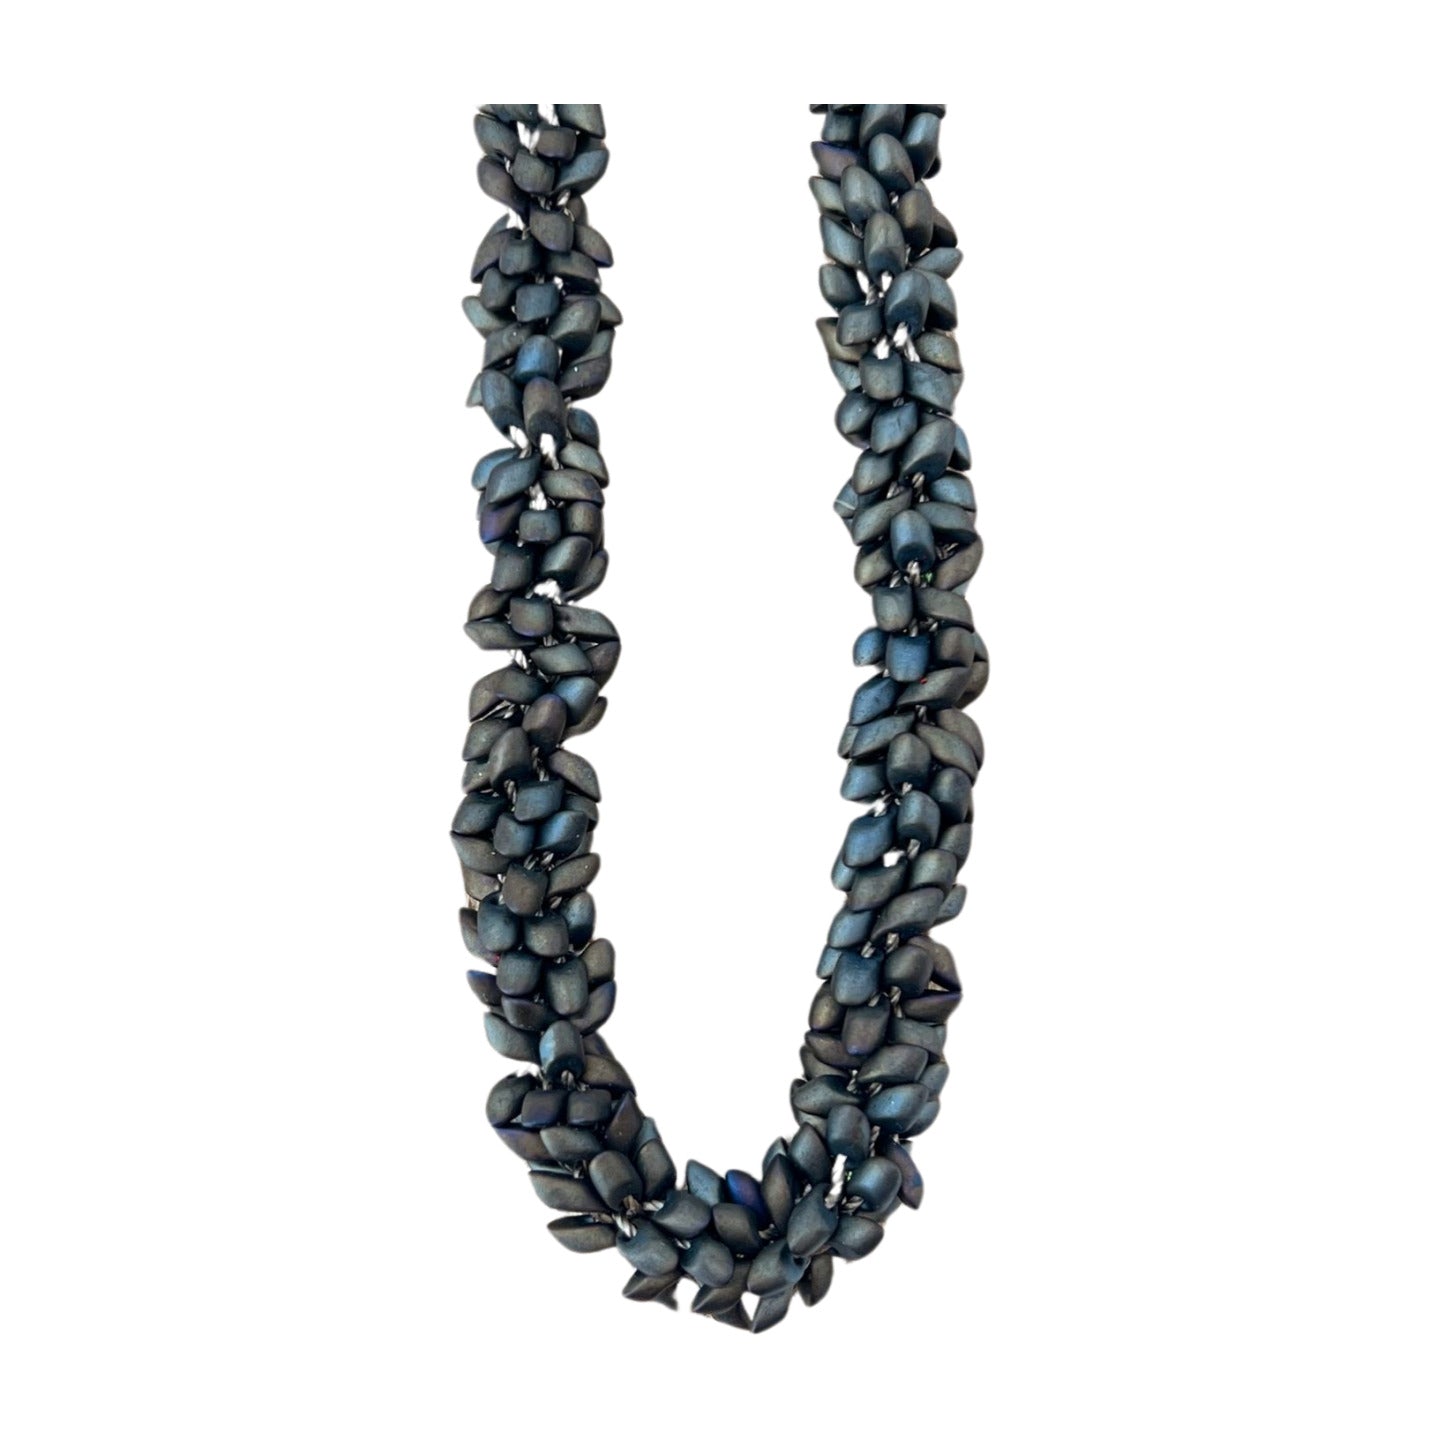 Pop-Up Mākeke - Akalei Designs - Matte Olive Green Dragon Scales Lei Necklace - Close Up